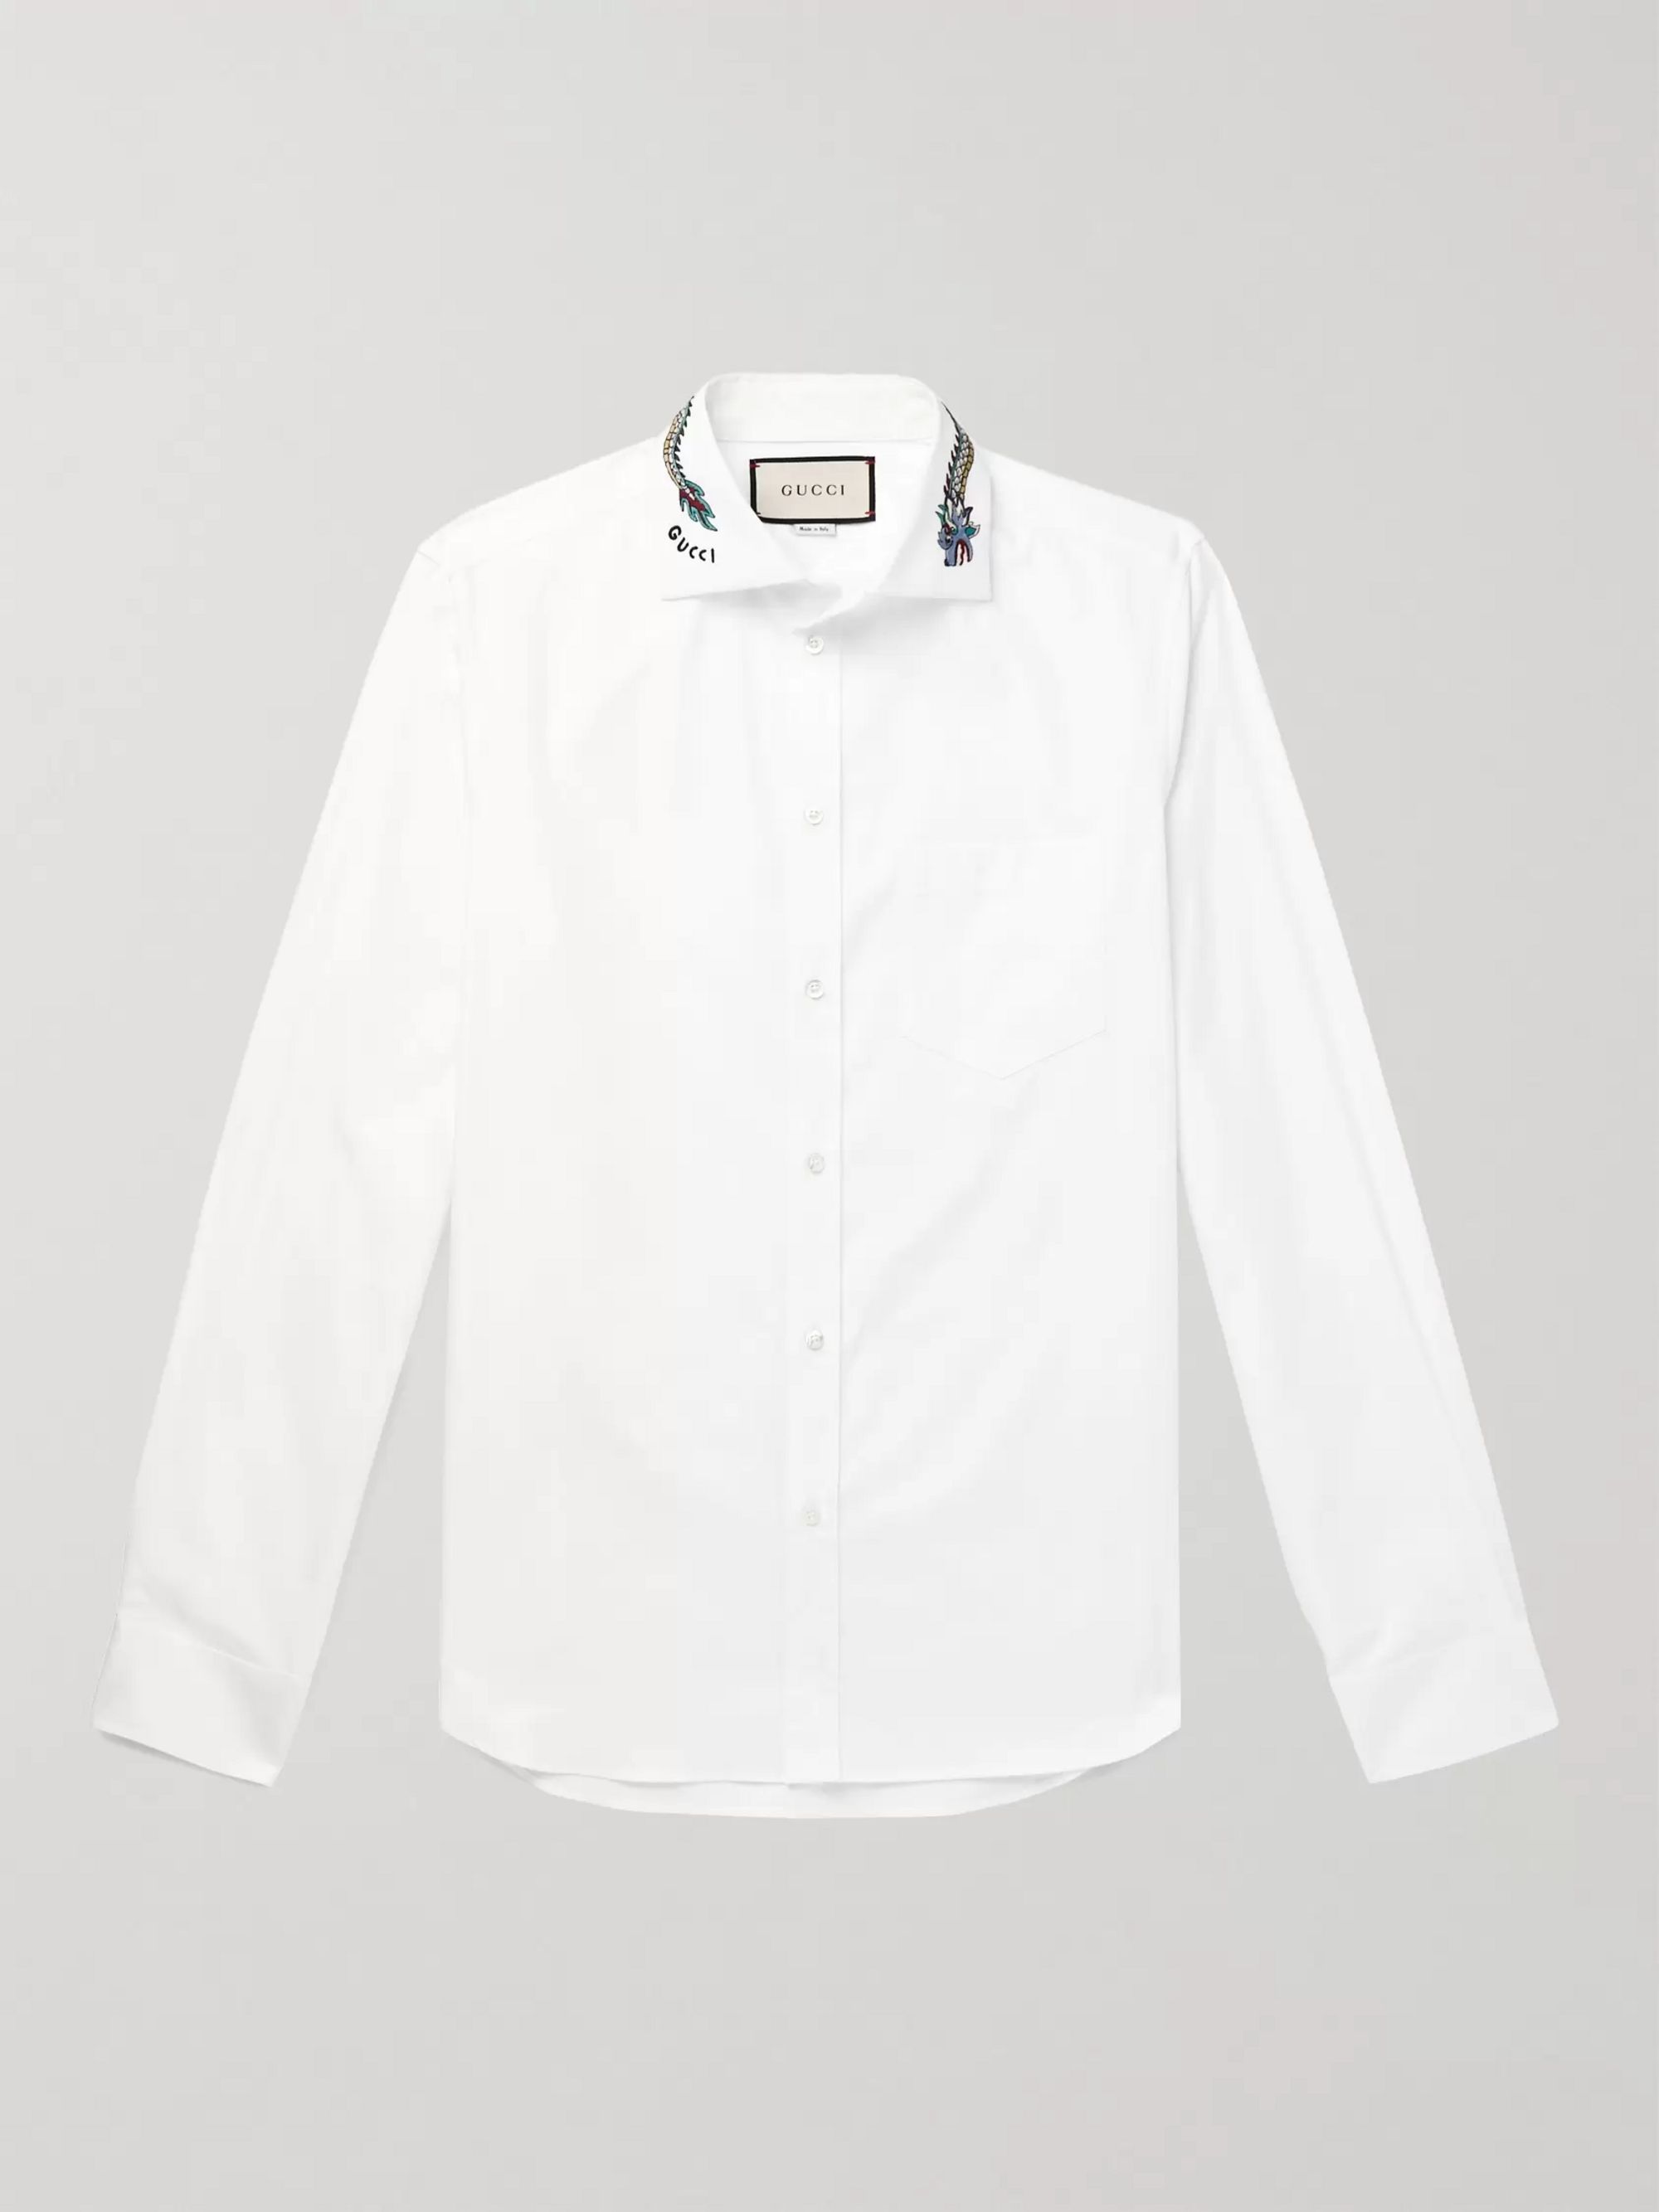 gucci white long sleeve shirt